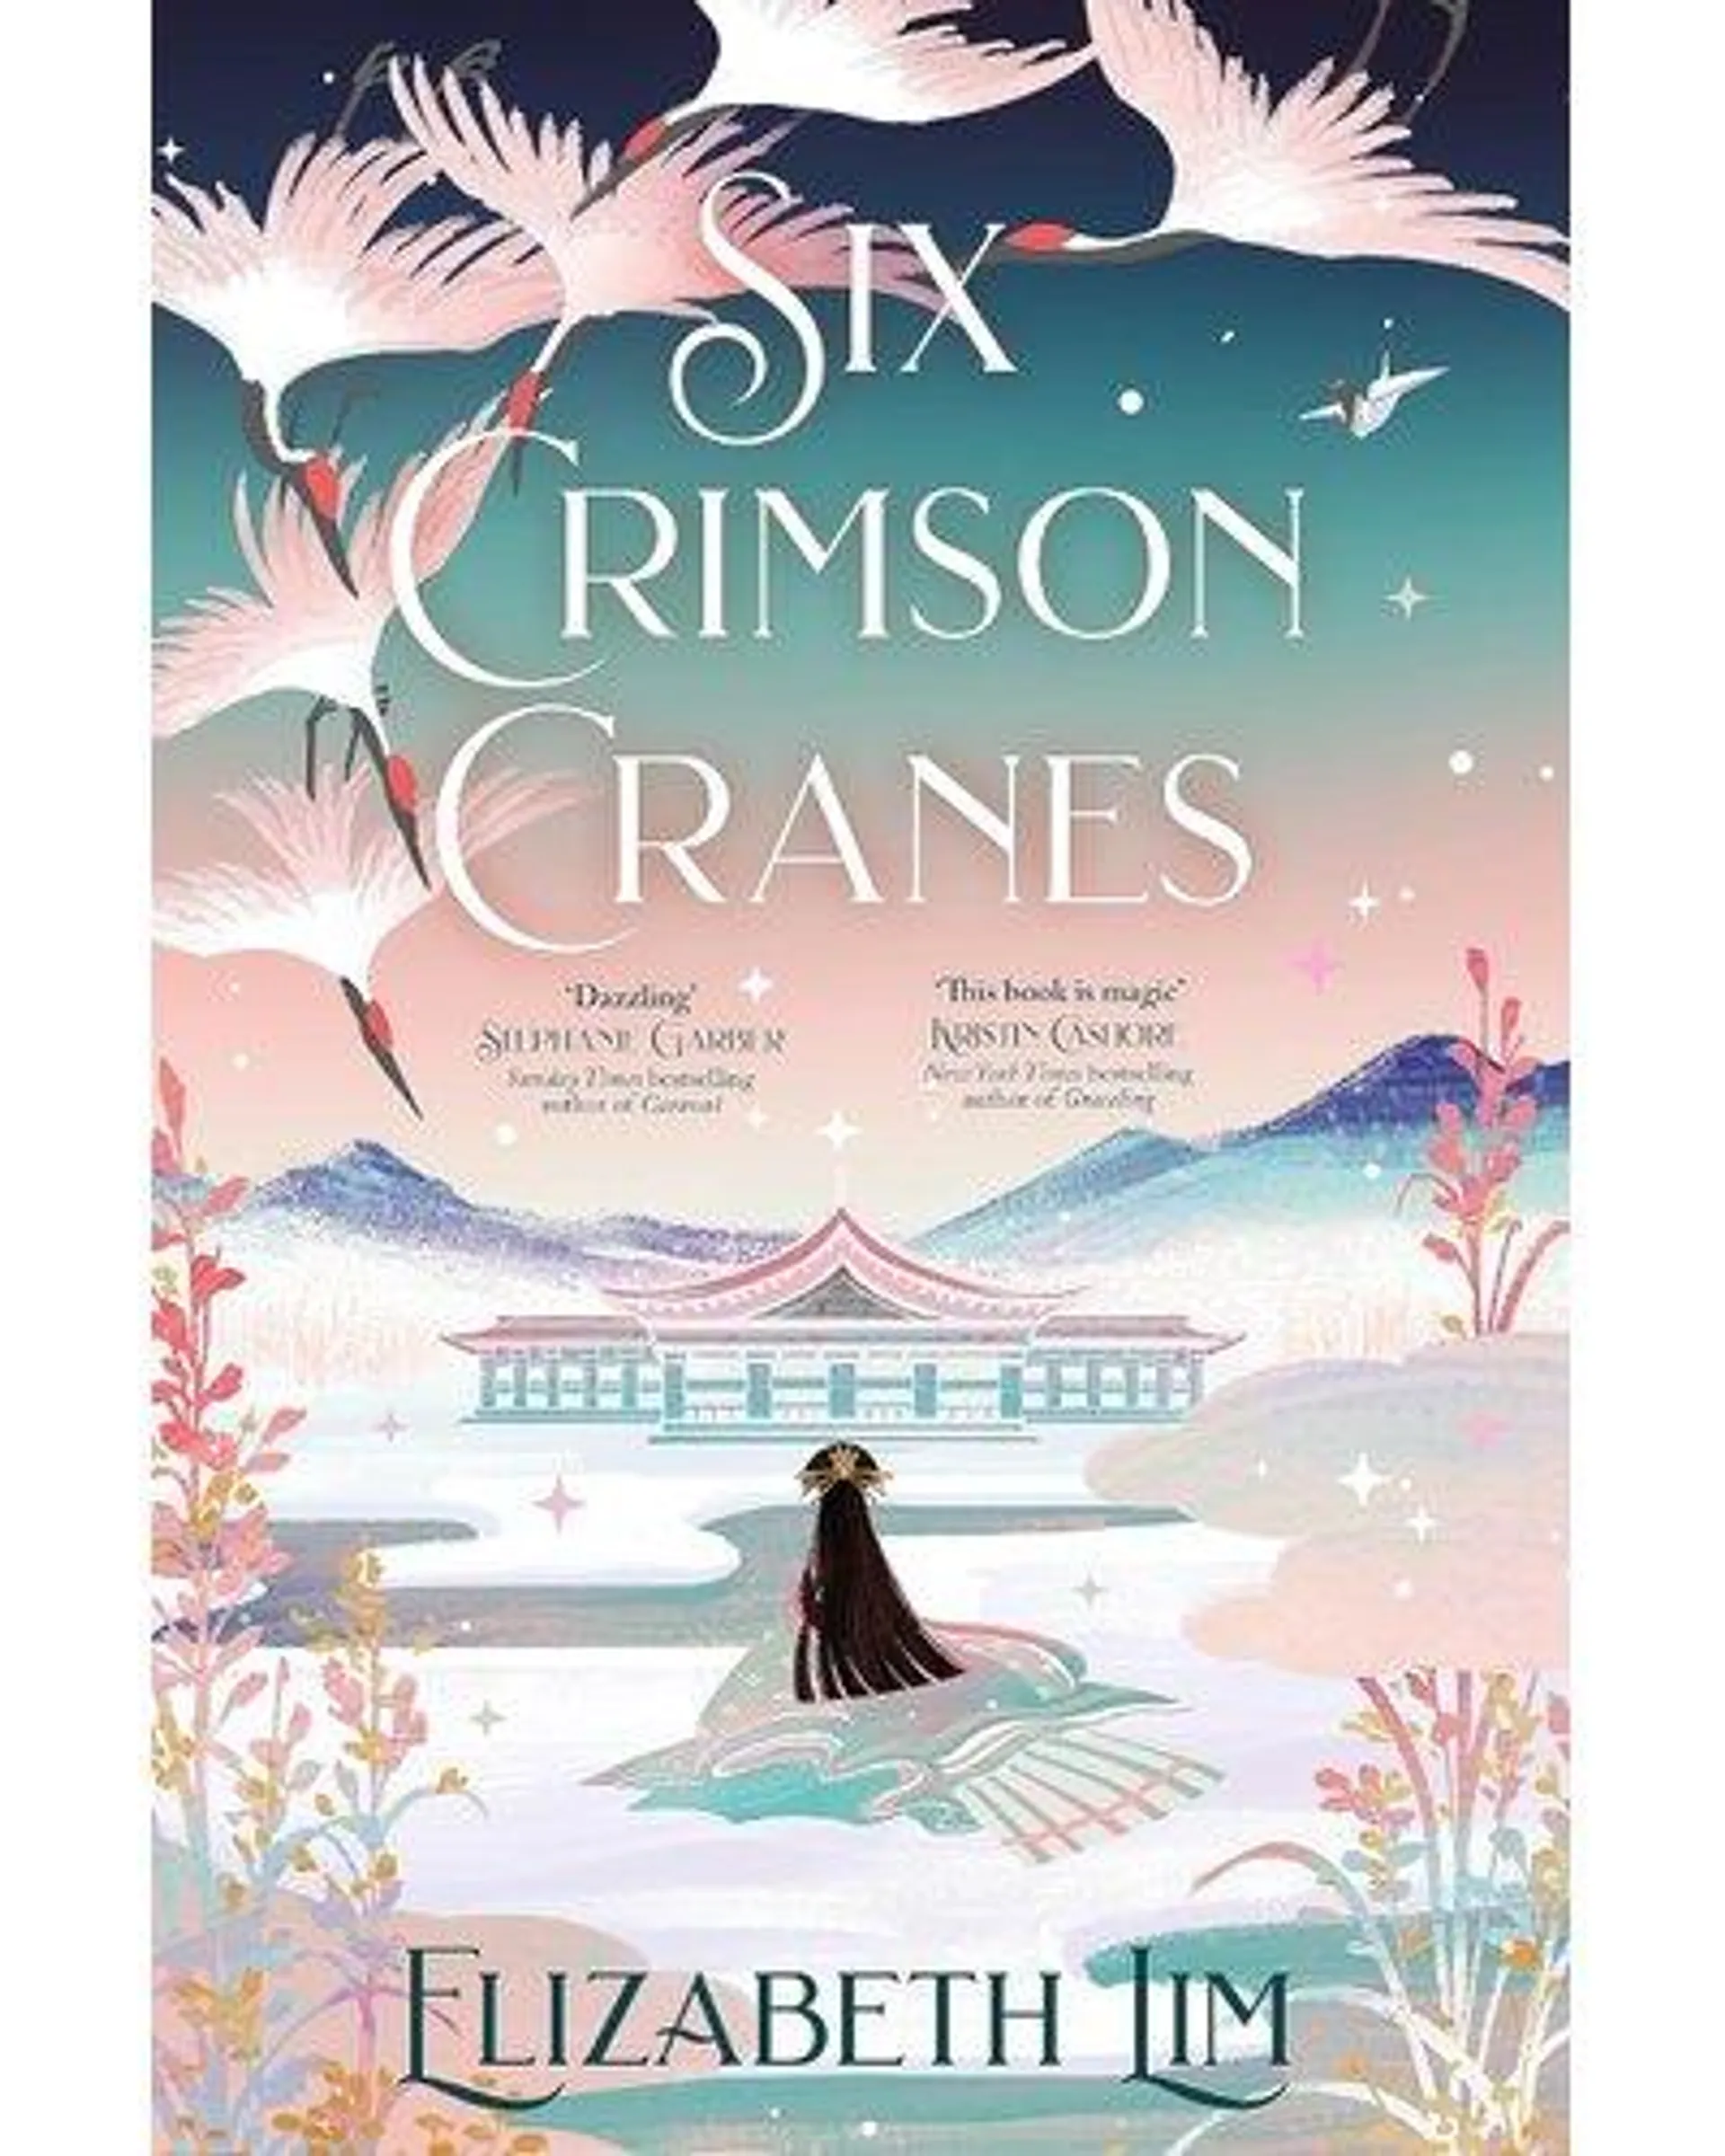 Six Crimson Cranes (Paperback)